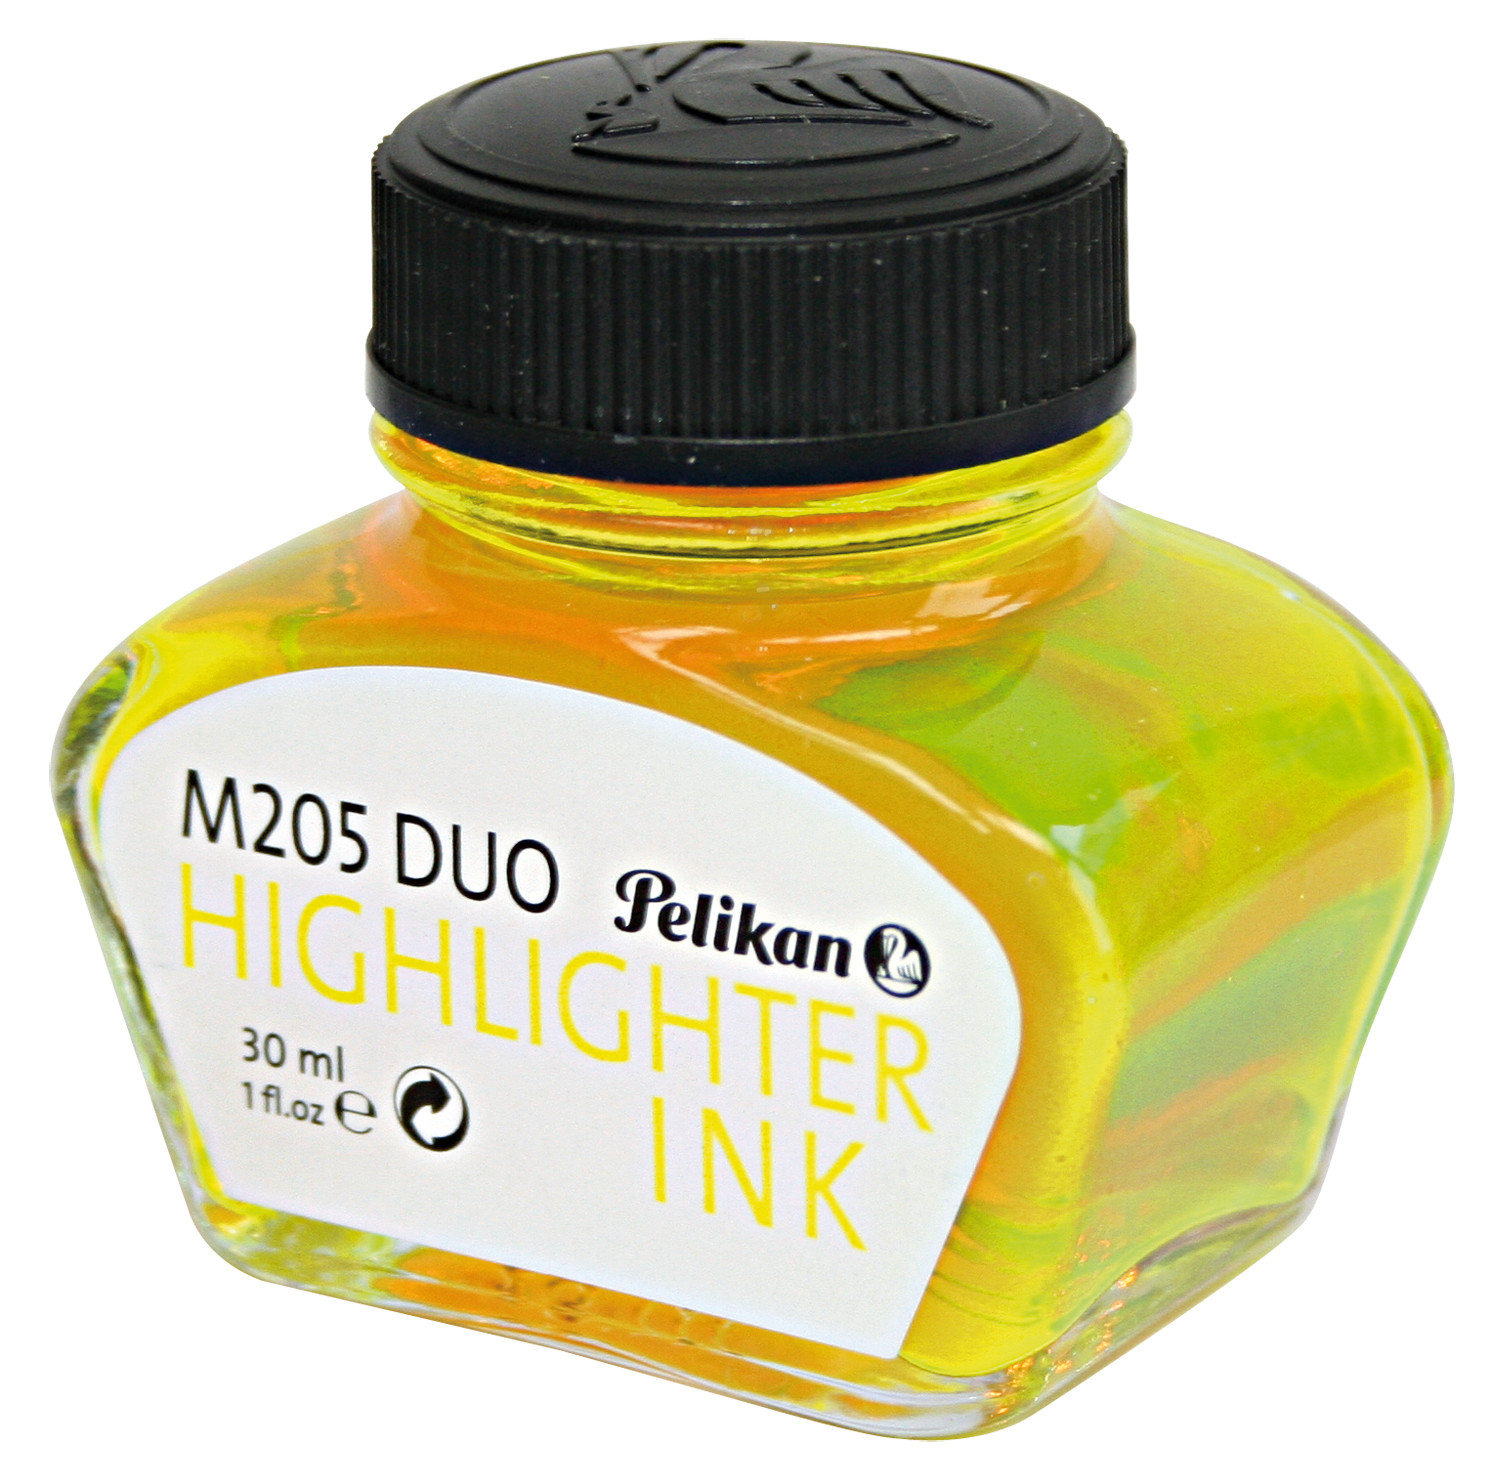 Pelikan Highlither Ink Neonyellow 30ml